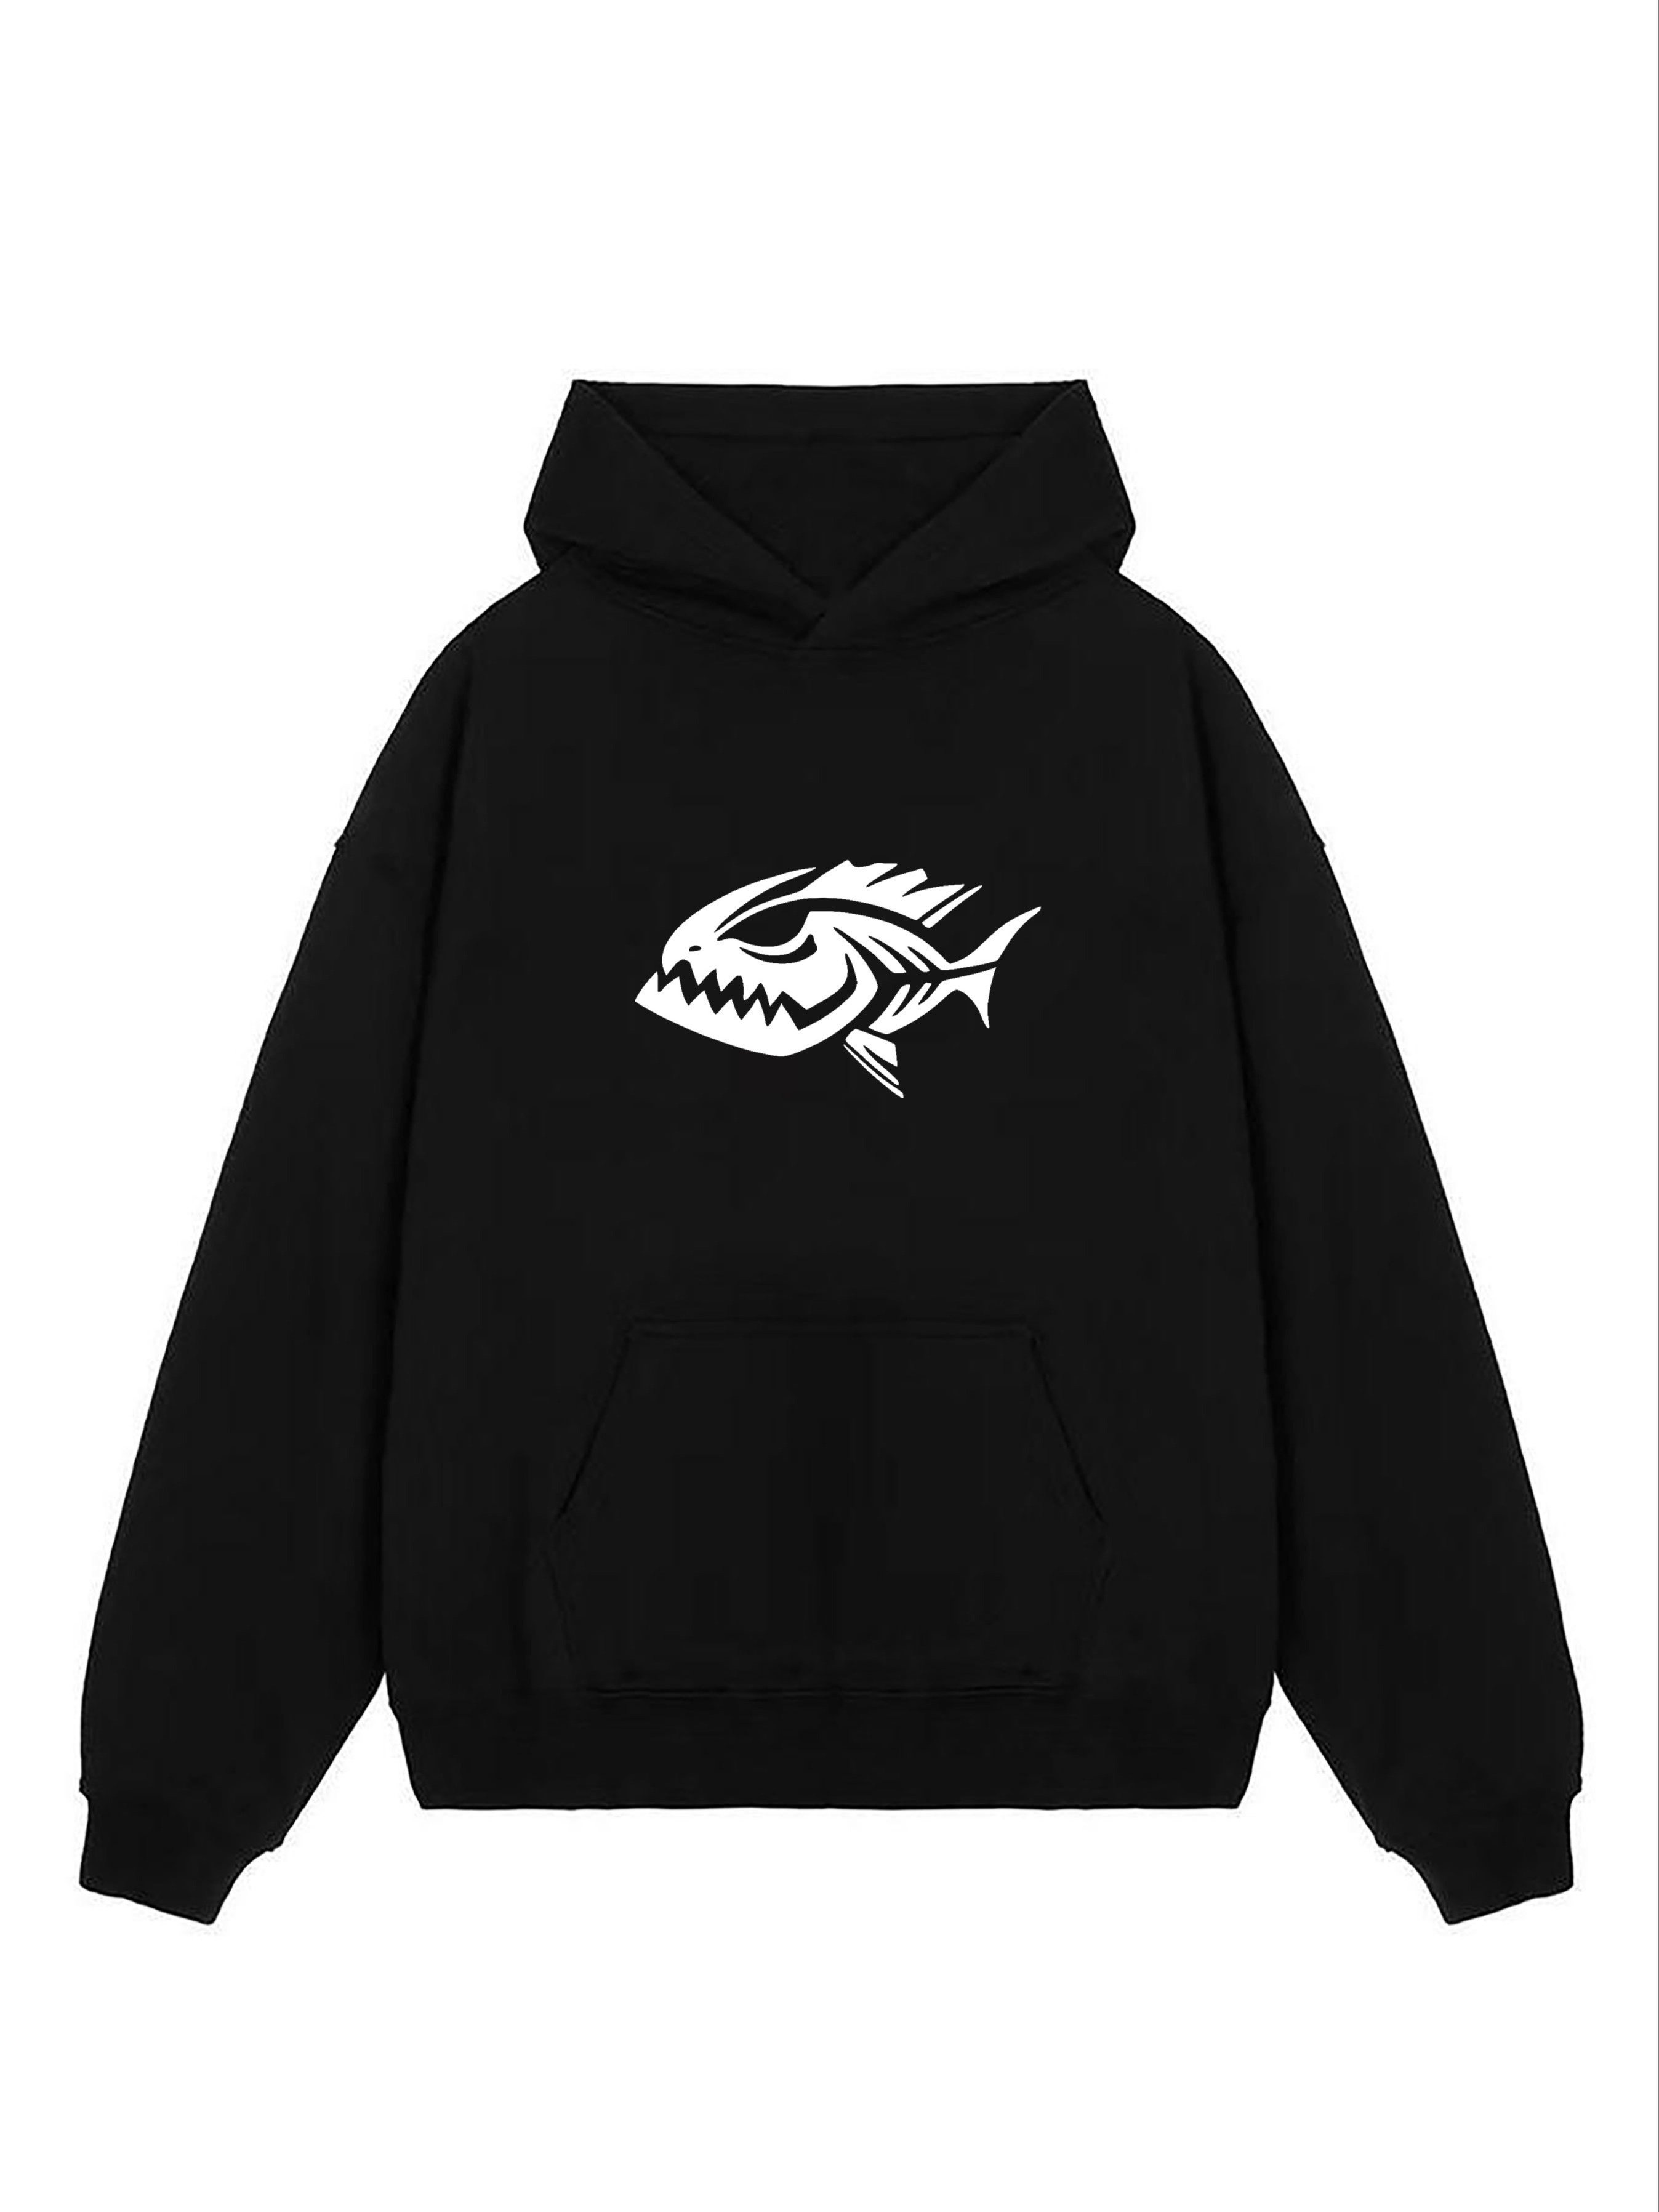 Fishing Print Hoodie, Hoodies For Men, Men's Casual Graphic Design Pullover Hooded Sweatshirt With Kangaroo Pocket Streetwear For Winter Fall, As